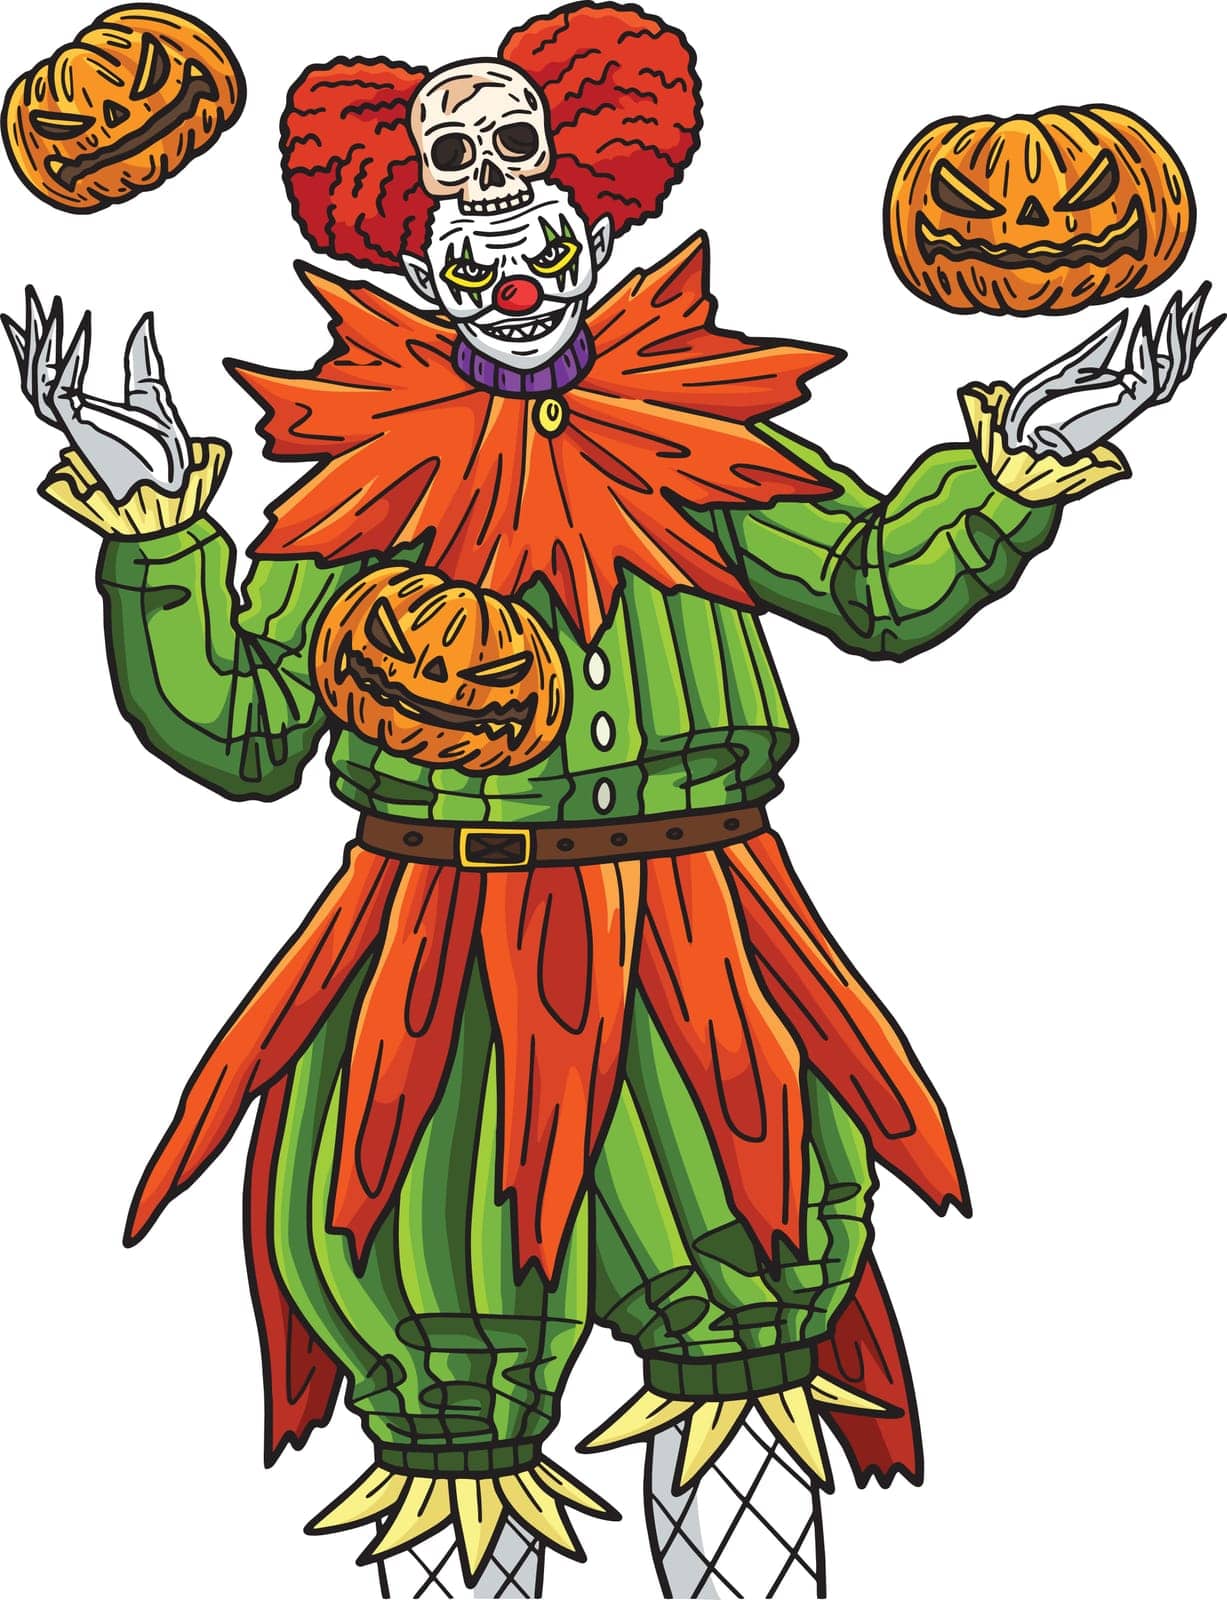 This cartoon clipart shows a Halloween Clown juggling a pumpkin illustration.